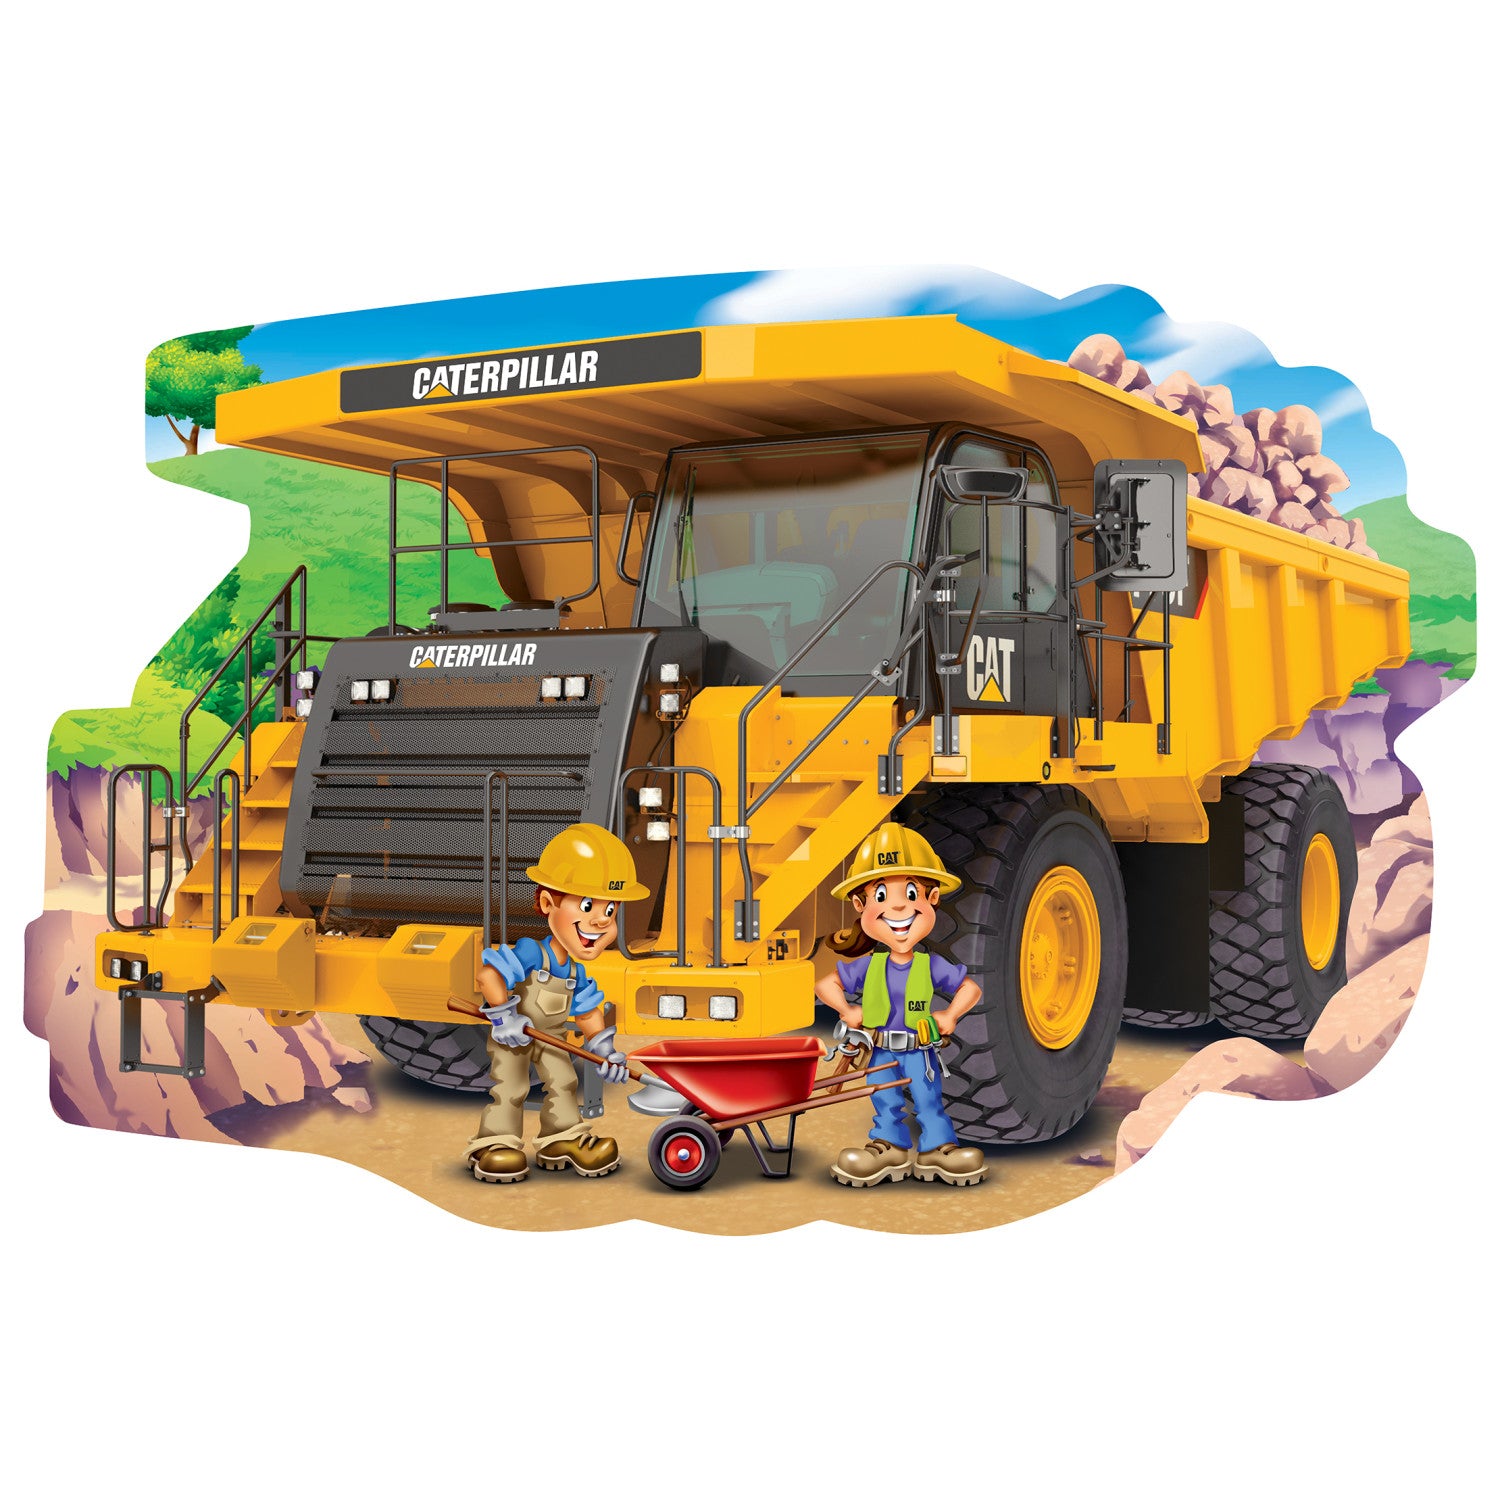 Caterpillar - Dump Truck 36 Piece Shaped Floor Puzzle